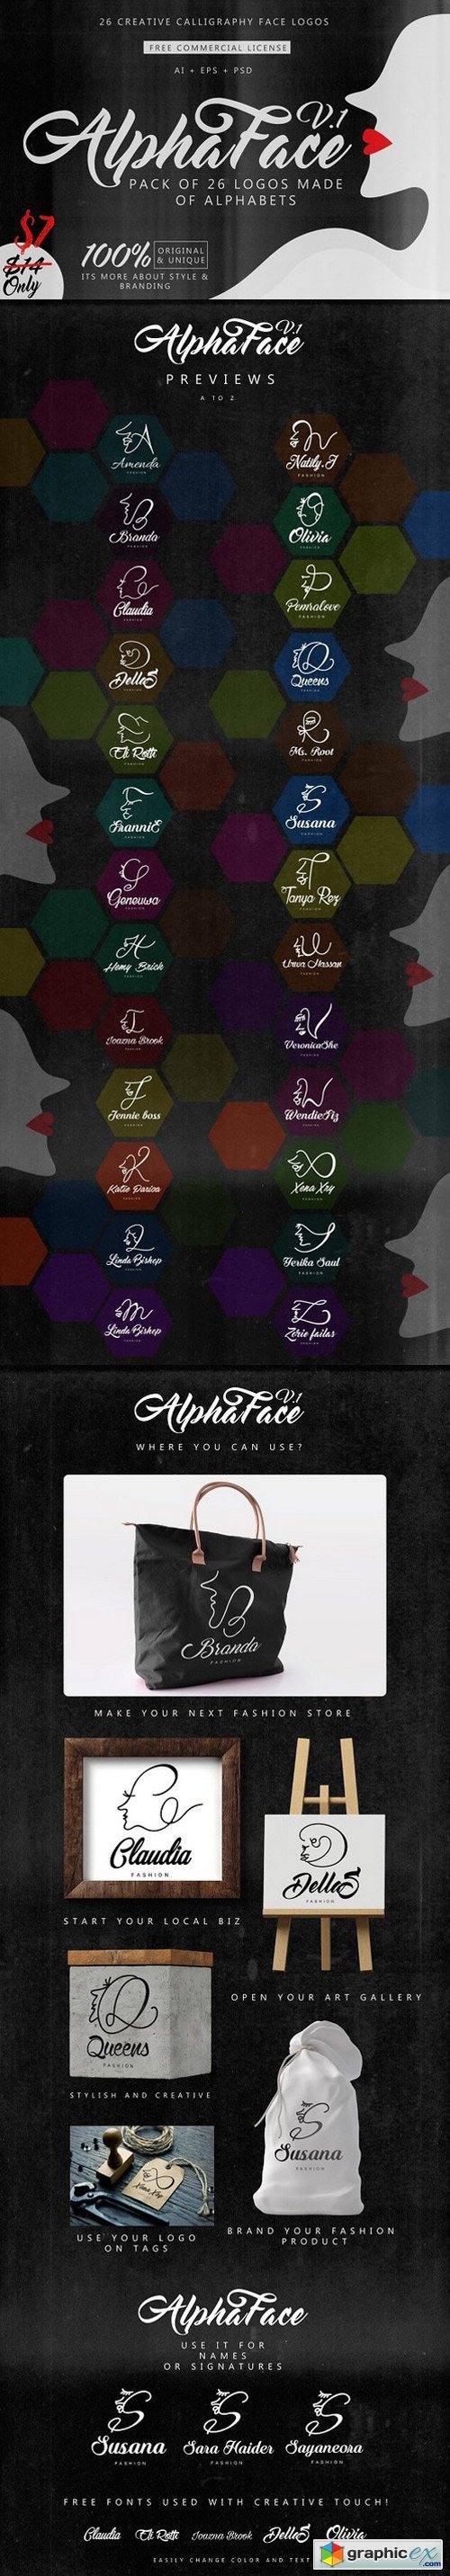 26 Logos for Her - AlphaFace